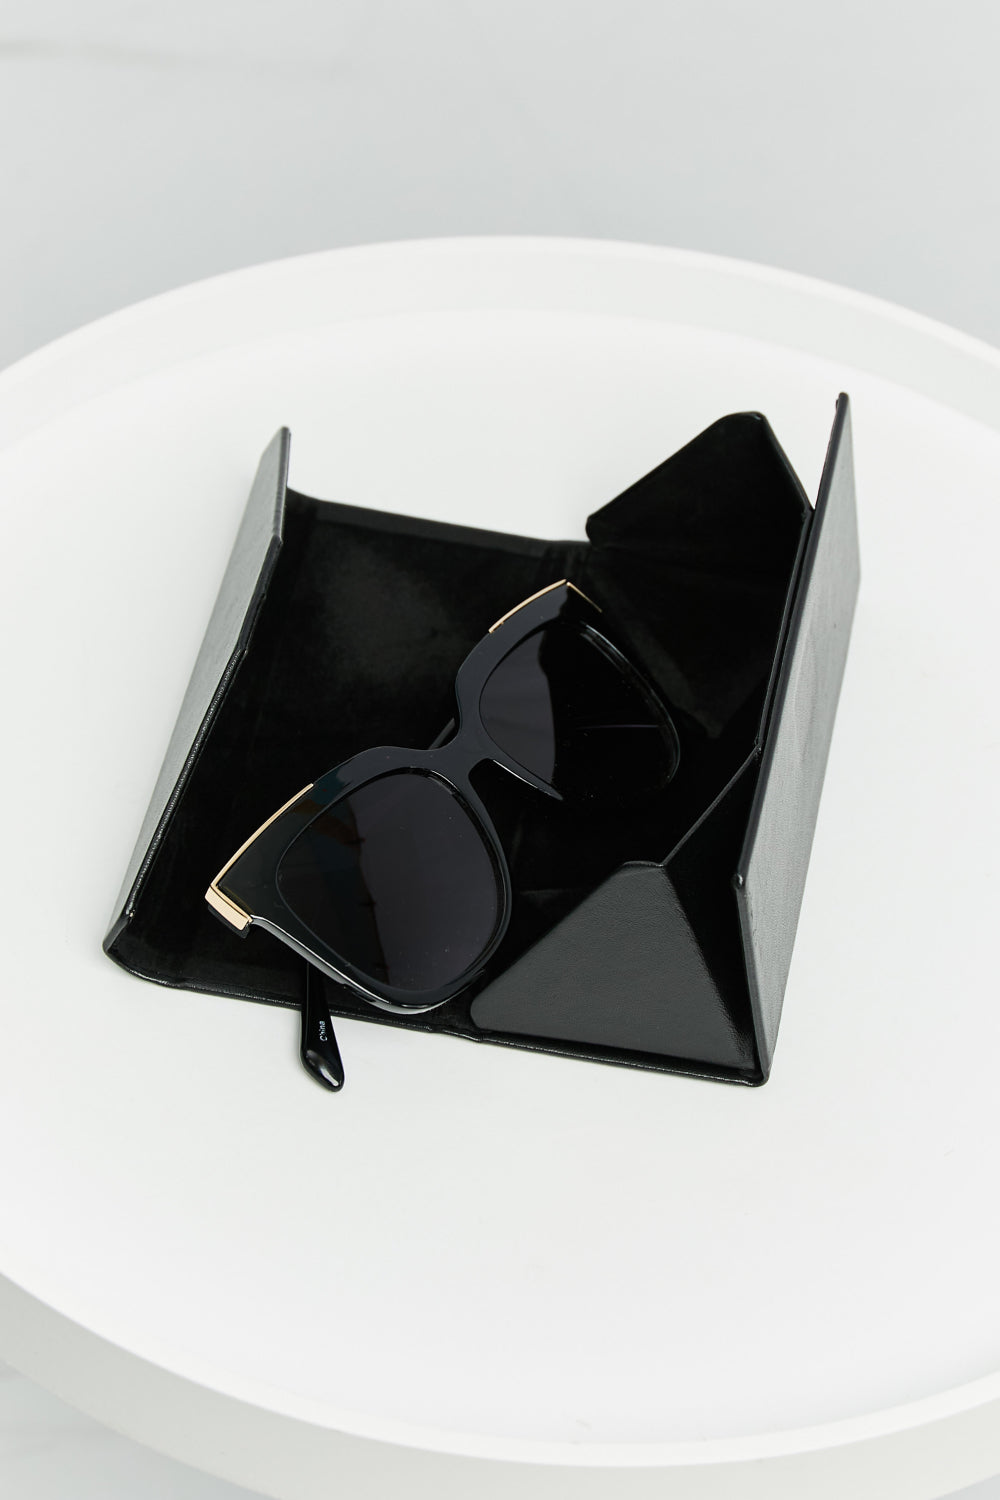 Tortoiseshell Acetate Frame Sunglasses-Trendsi-Tangerine-One Size-[option4]-[option5]-[option6]-[option7]-[option8]-Shop-Boutique-Clothing-for-Women-Online